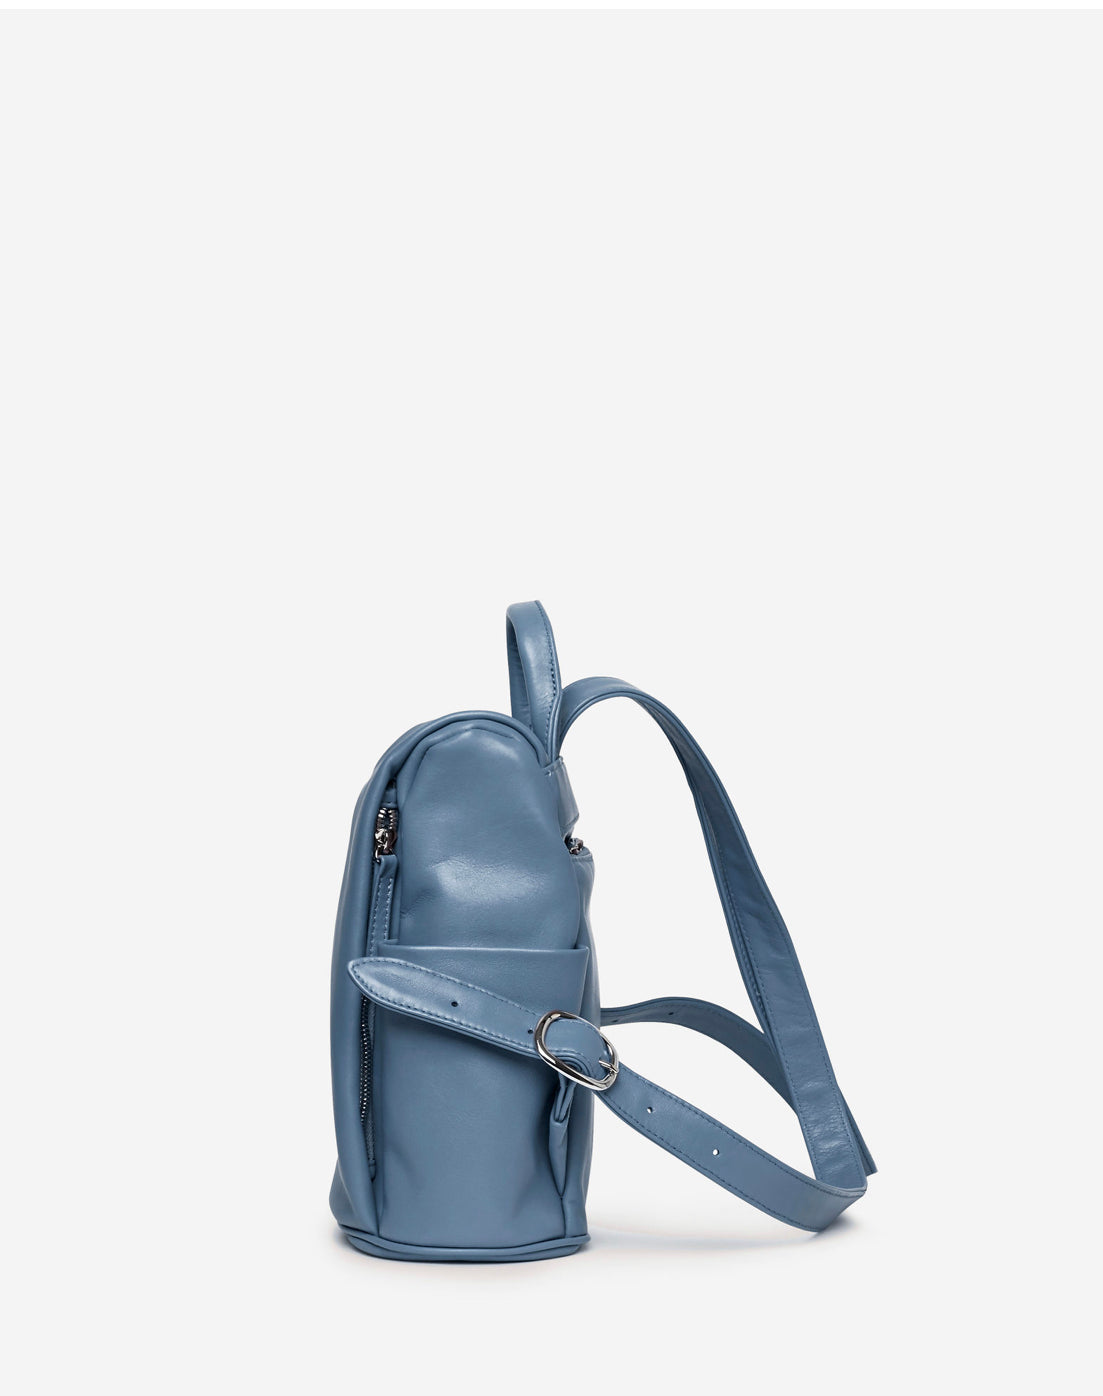 Mila Mini Backpack - Jeans Mini Backpack Joey James, The Label   